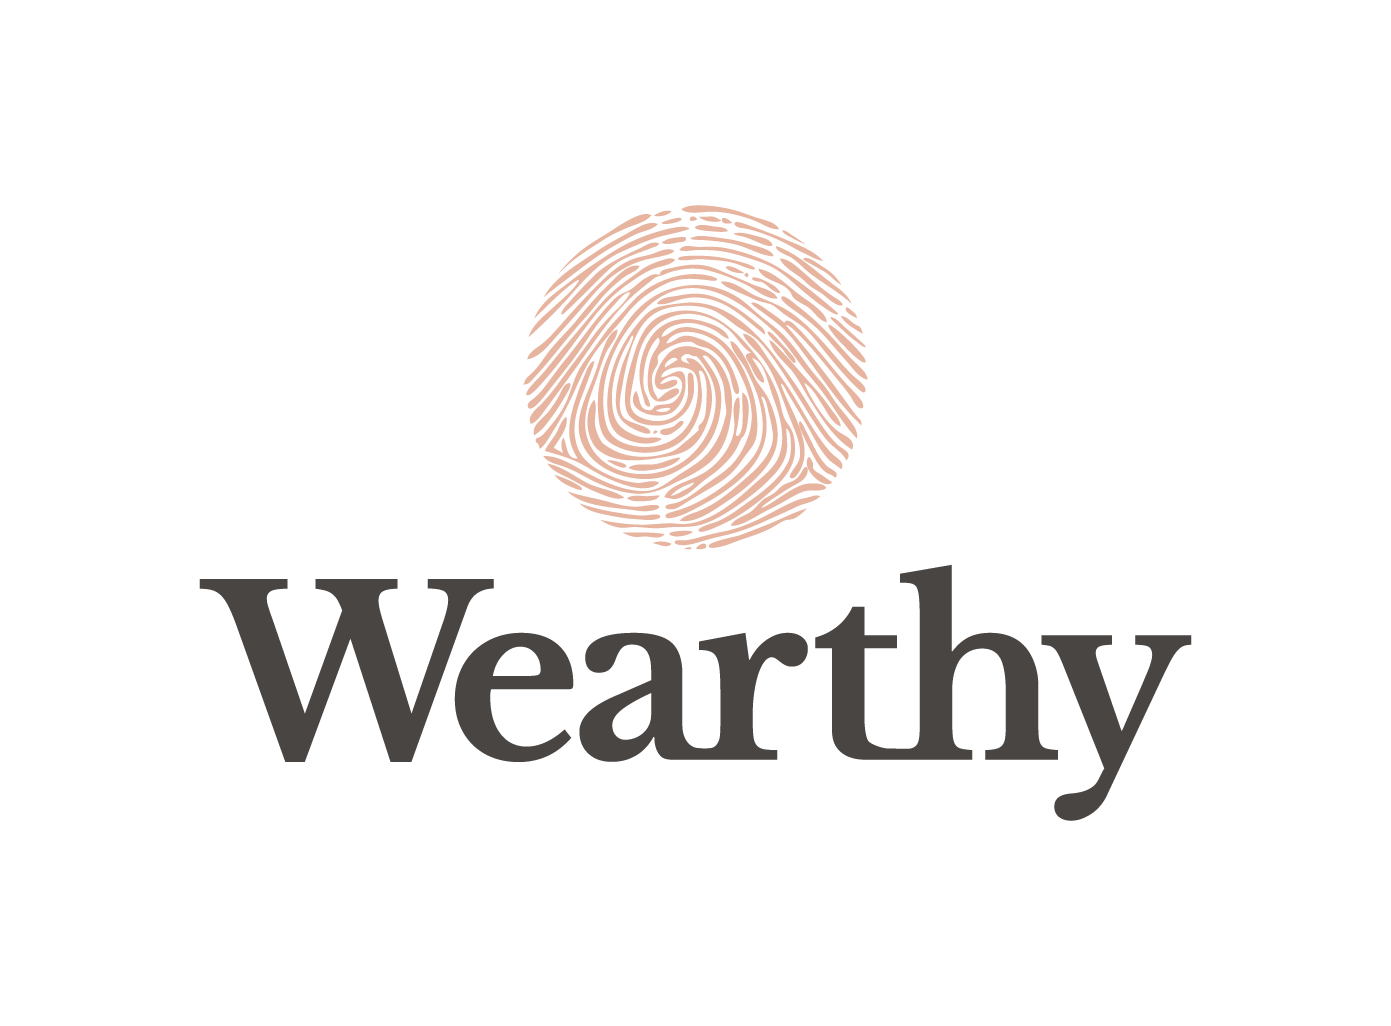 Wearthy | The playful beginnings of human flourishing.